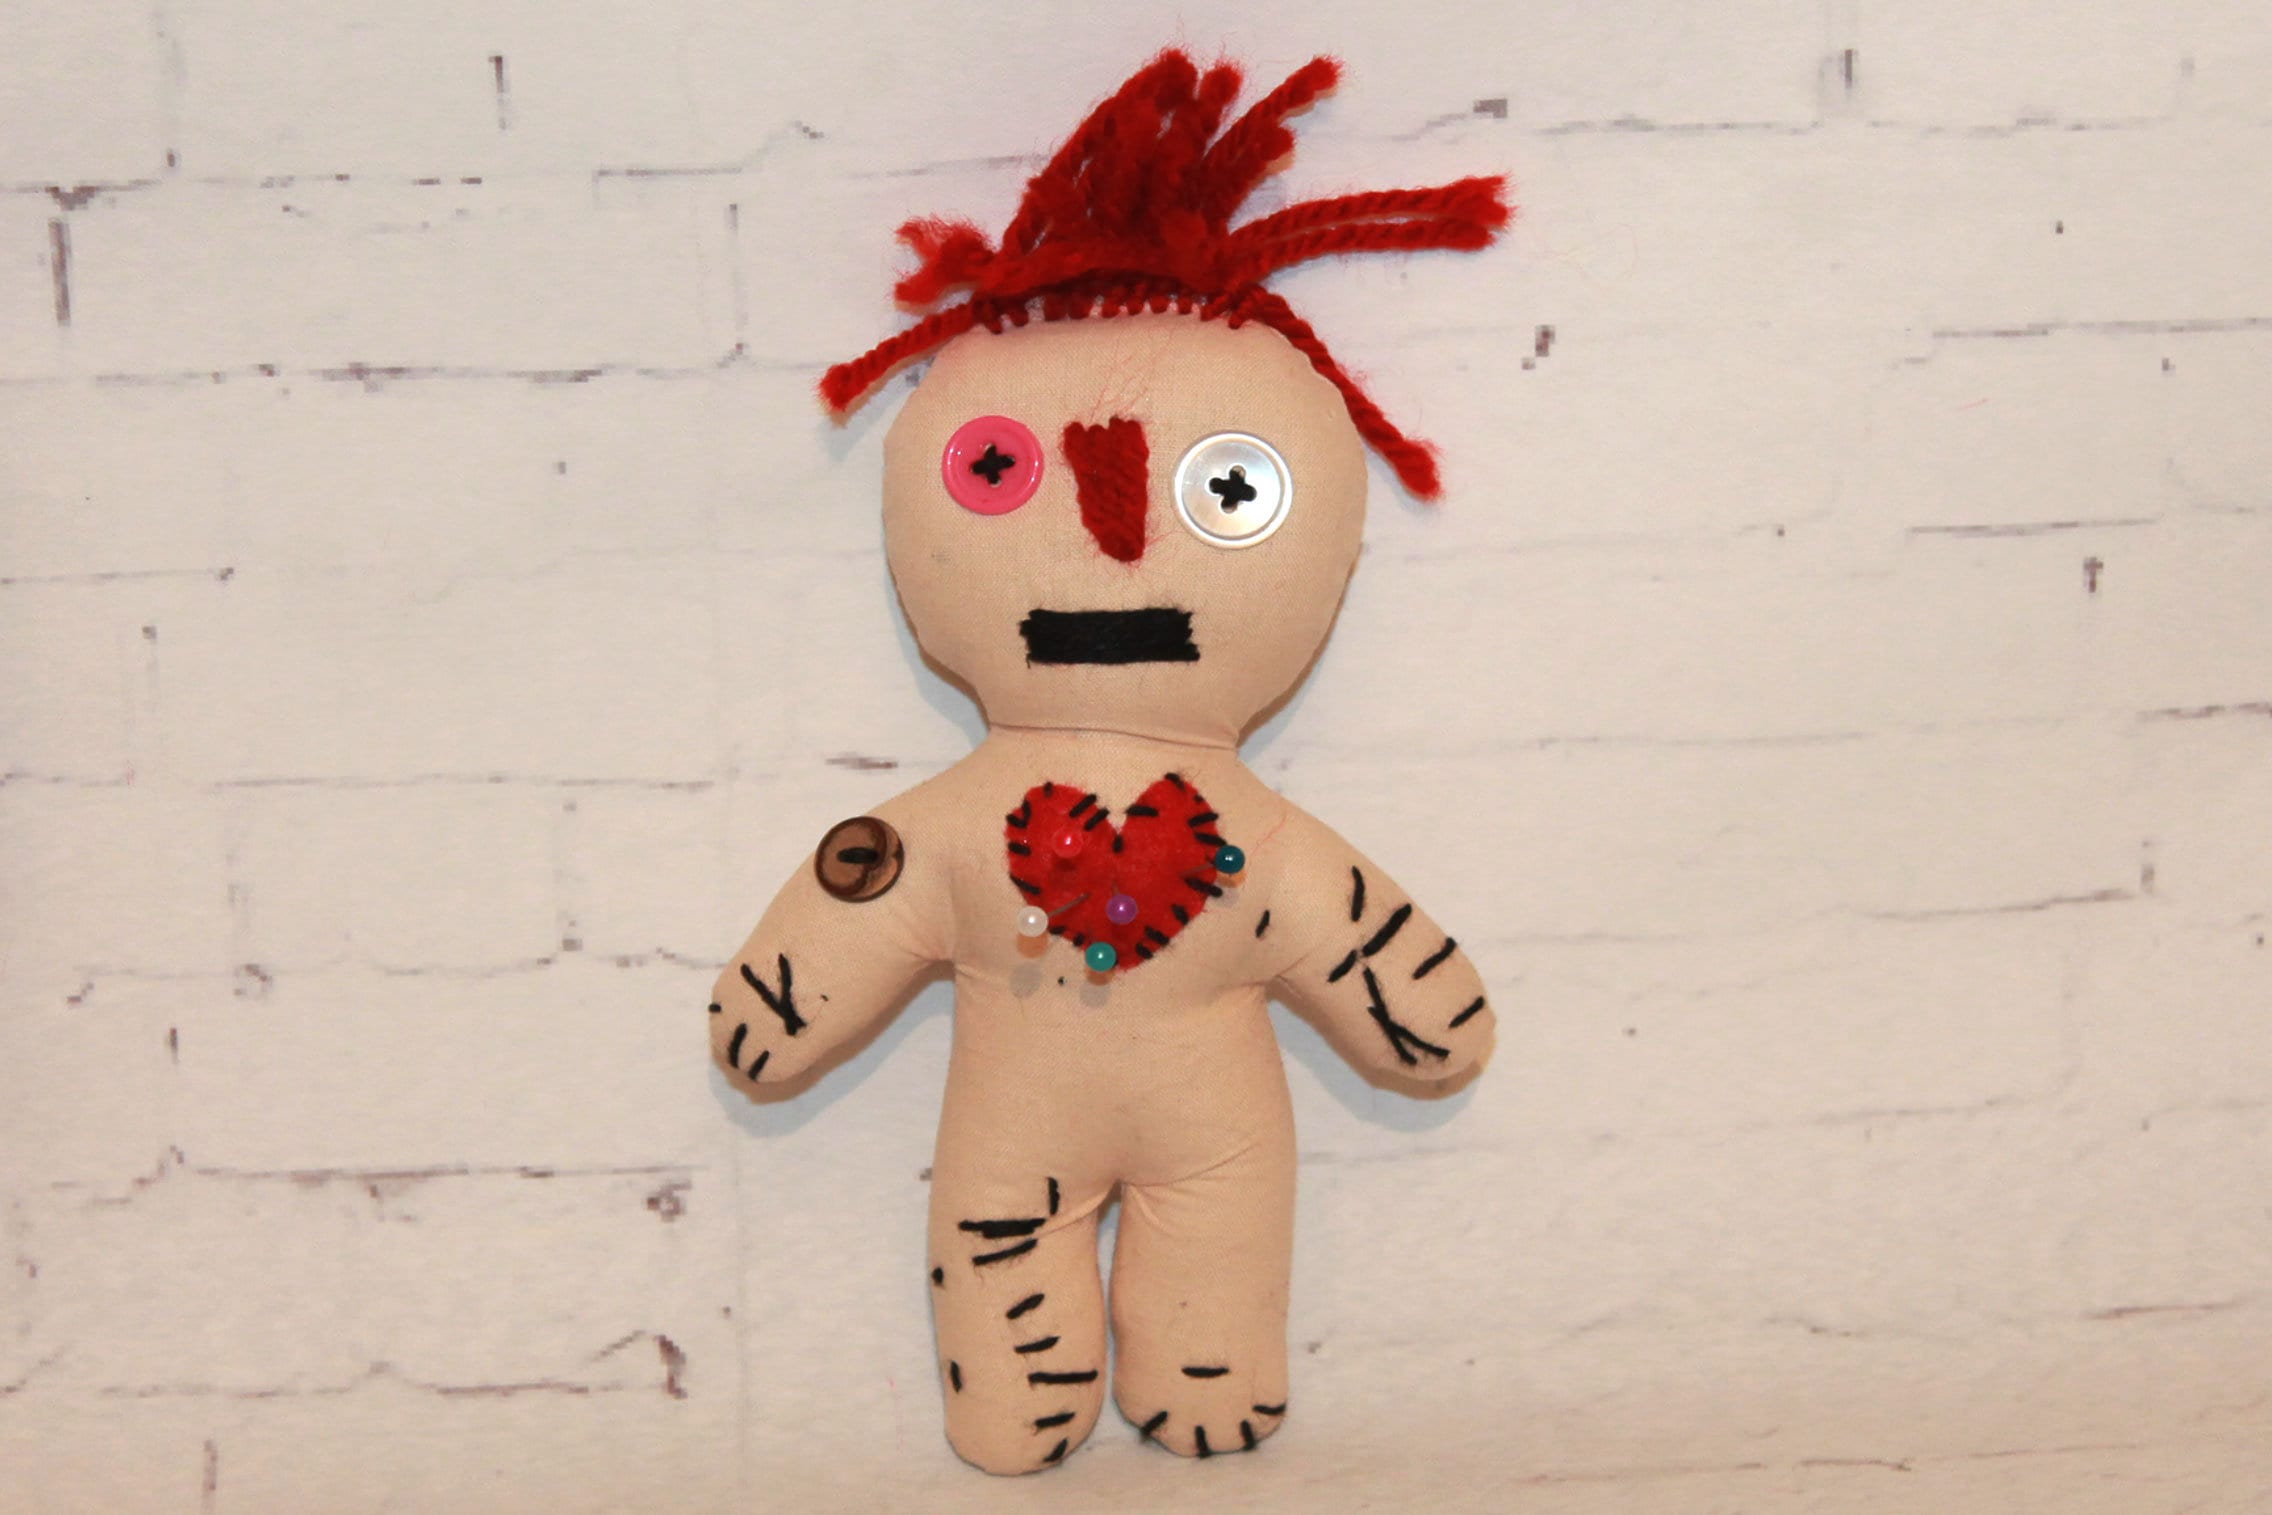 Voodoo Doll - Jogue Voodoo Doll Jogo Online